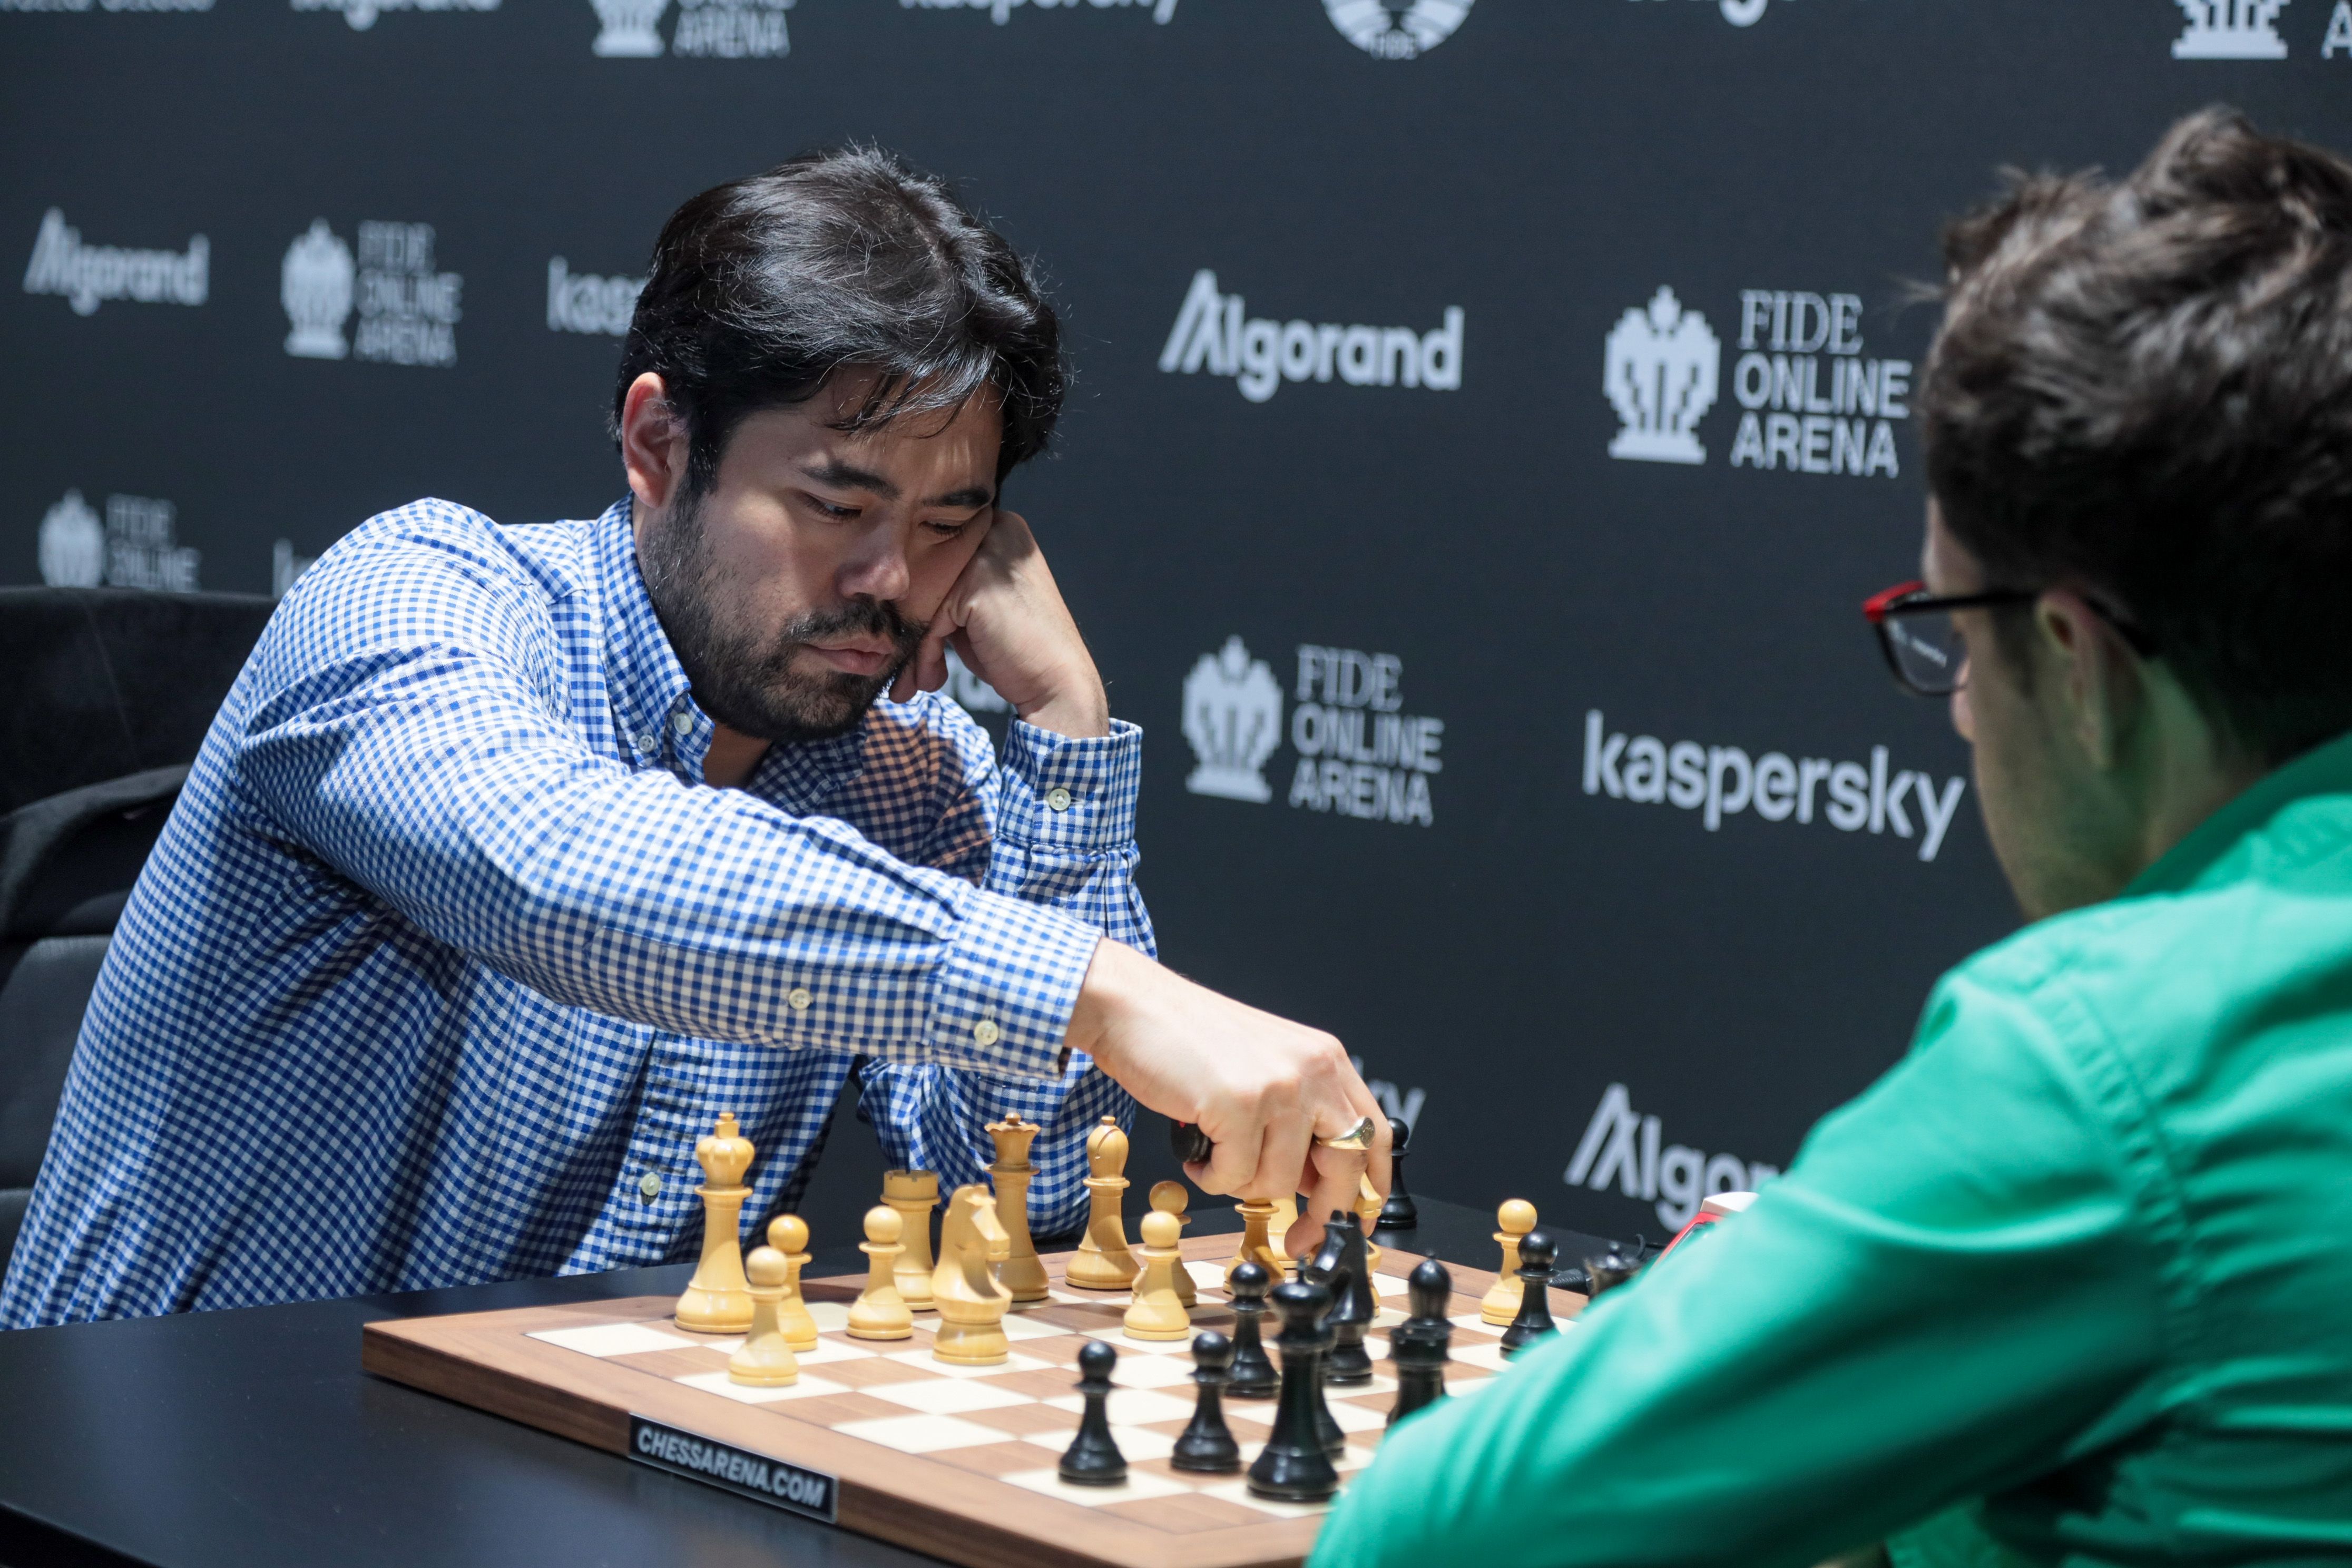 2022 FIDE Grand Prix Berlin SF1: Aronian, Nakamura Score Emphatic Wins 